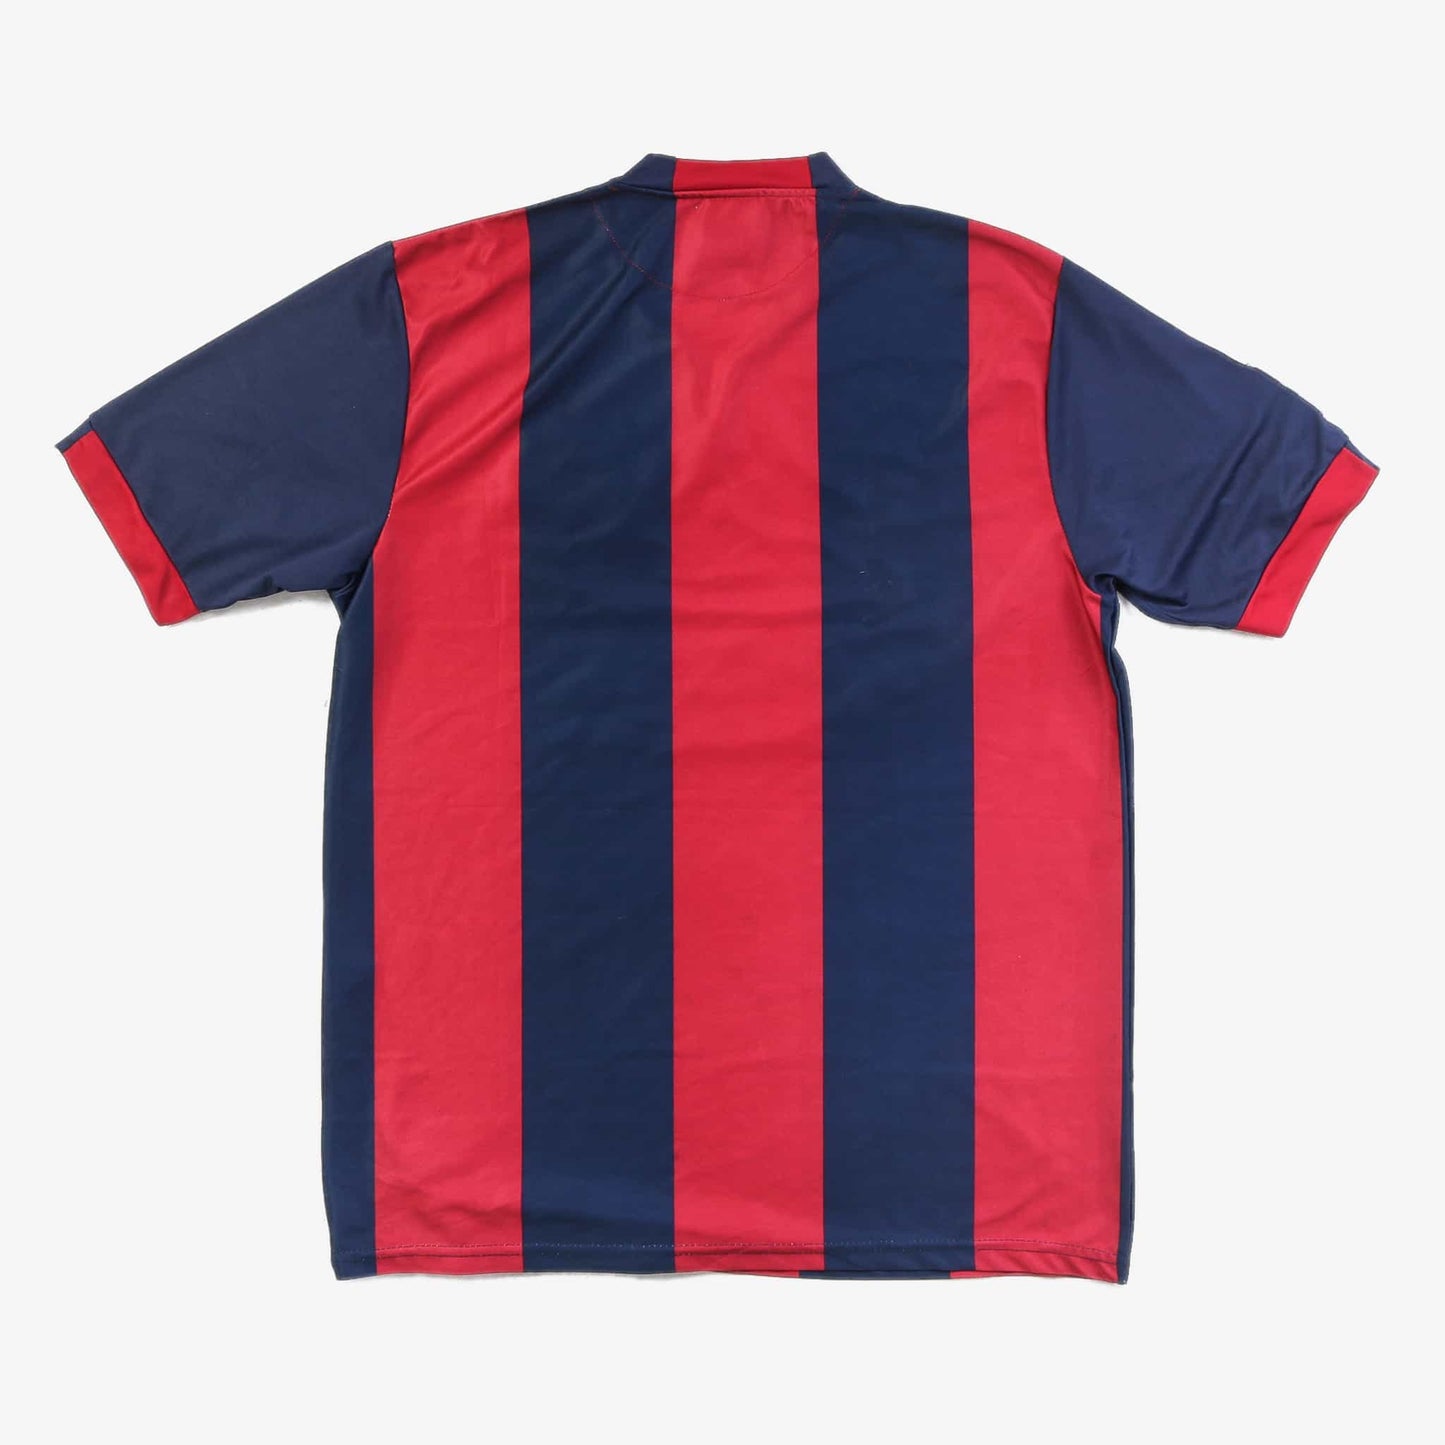 Barcelona Football Shirt - American Madness